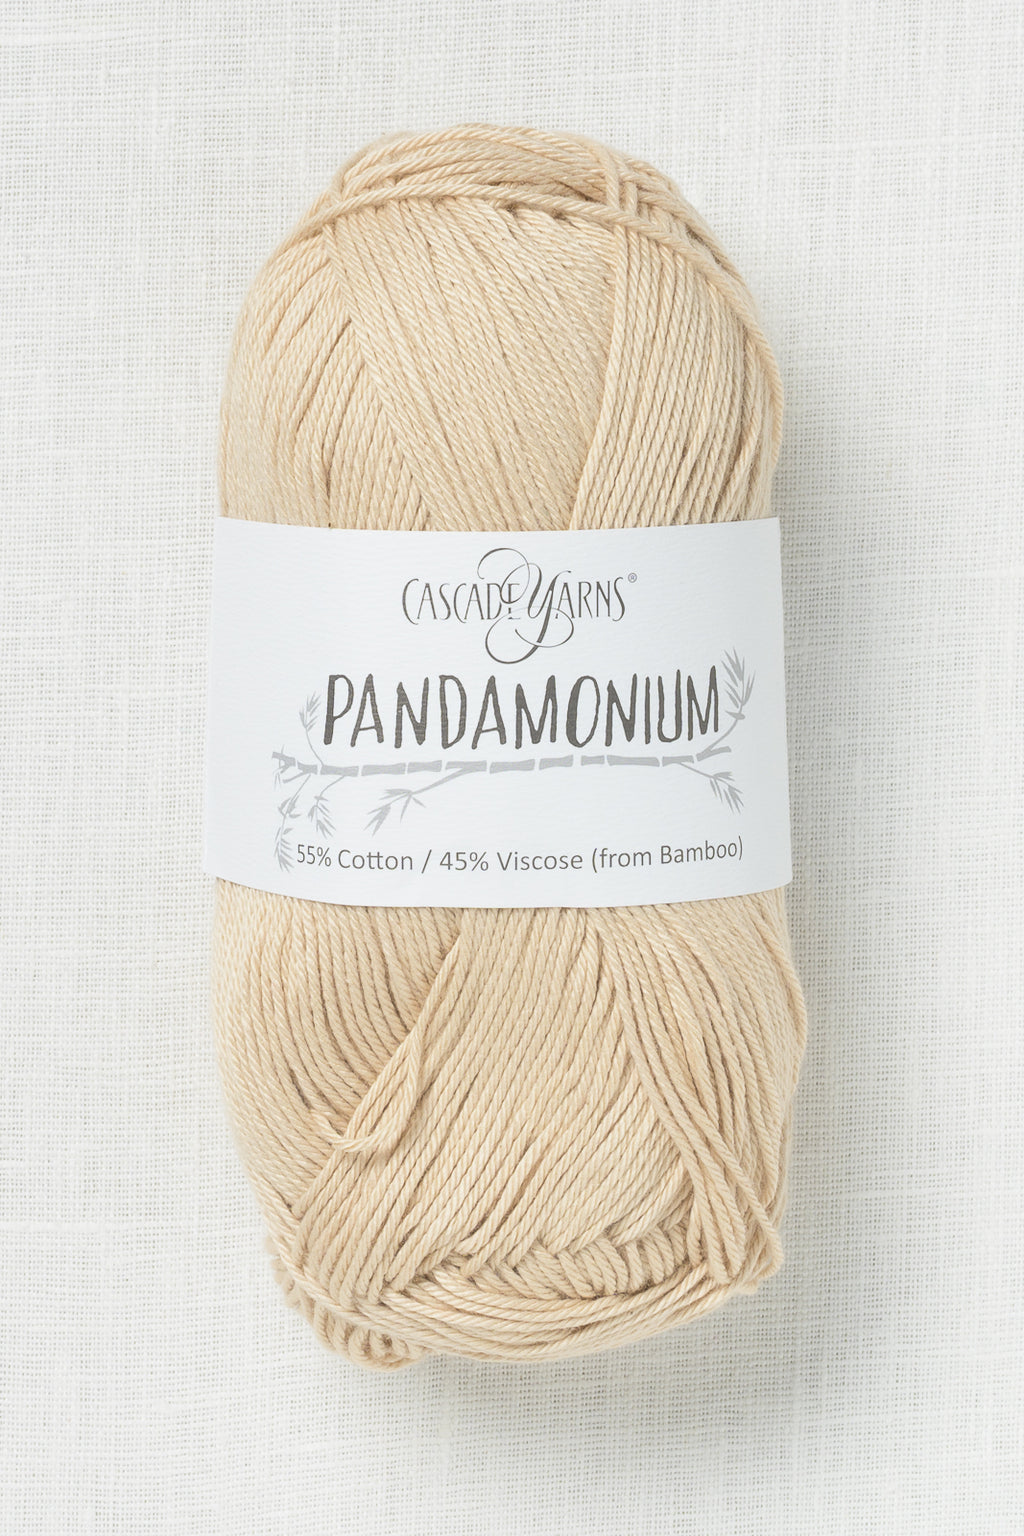 Cascade Yarns Pandamonium - Yarn.com